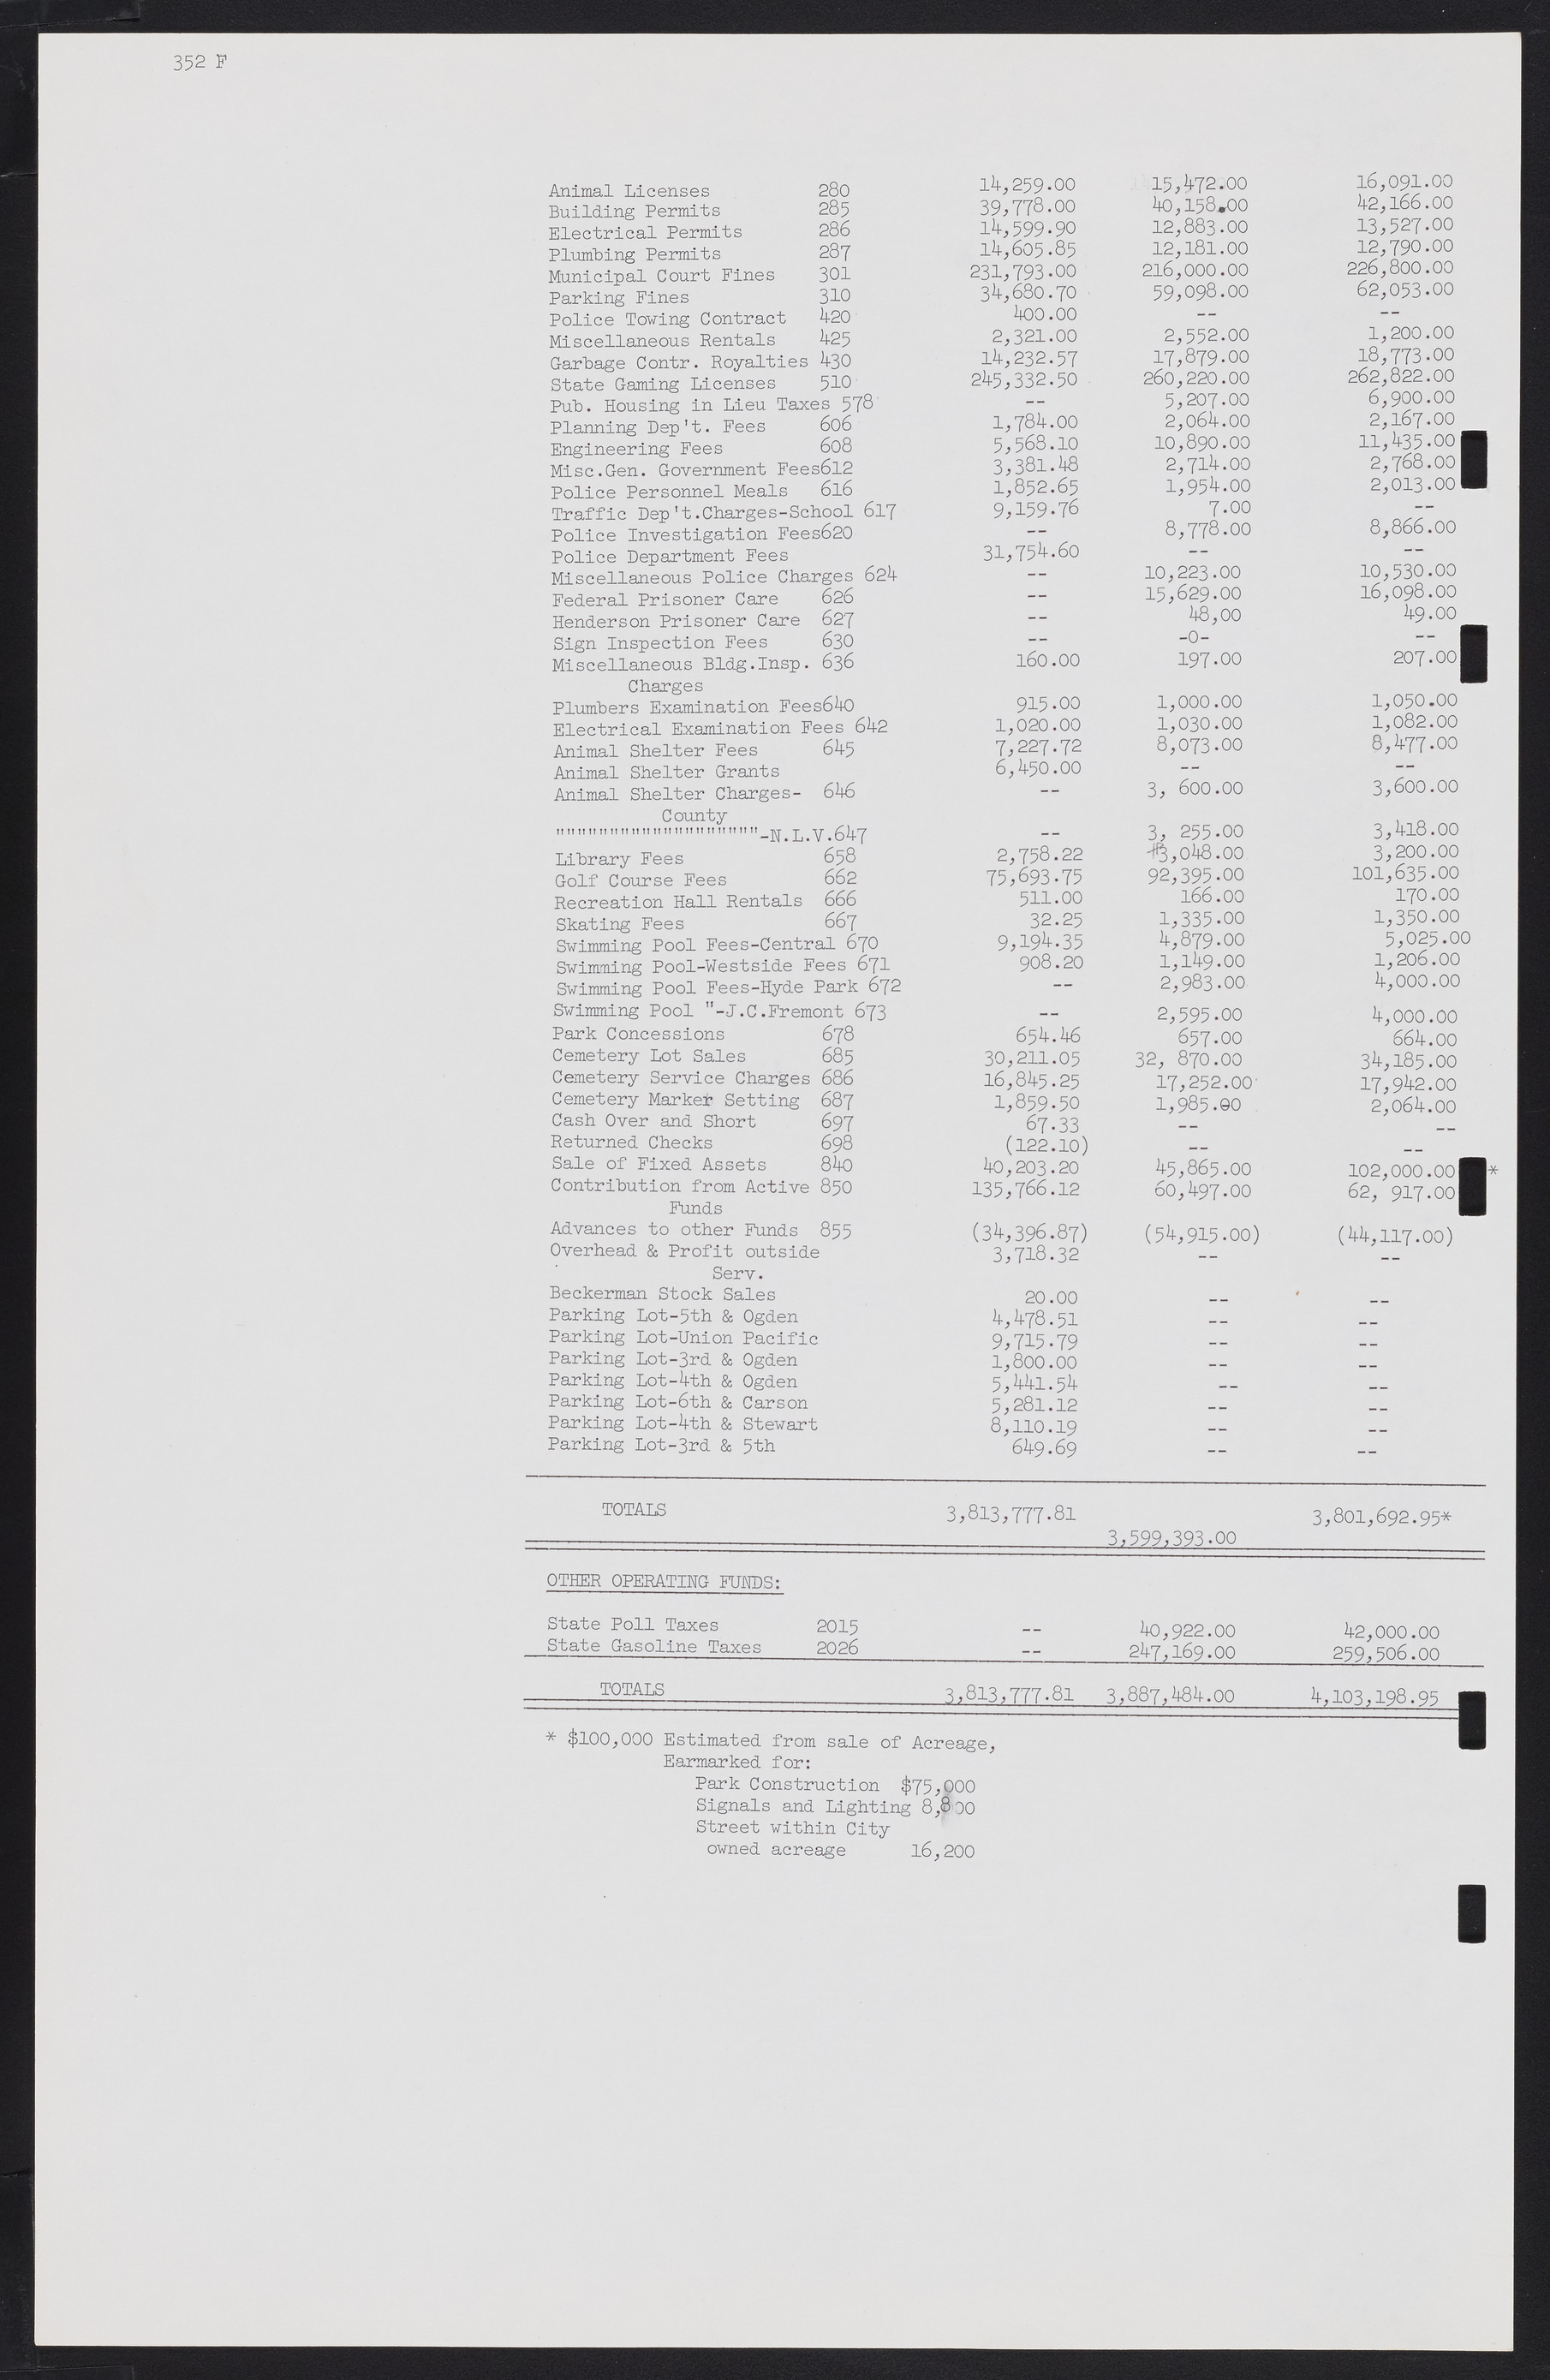 Las Vegas City Commission Minutes, November 20, 1957 to December 2, 1959, lvc000011-366